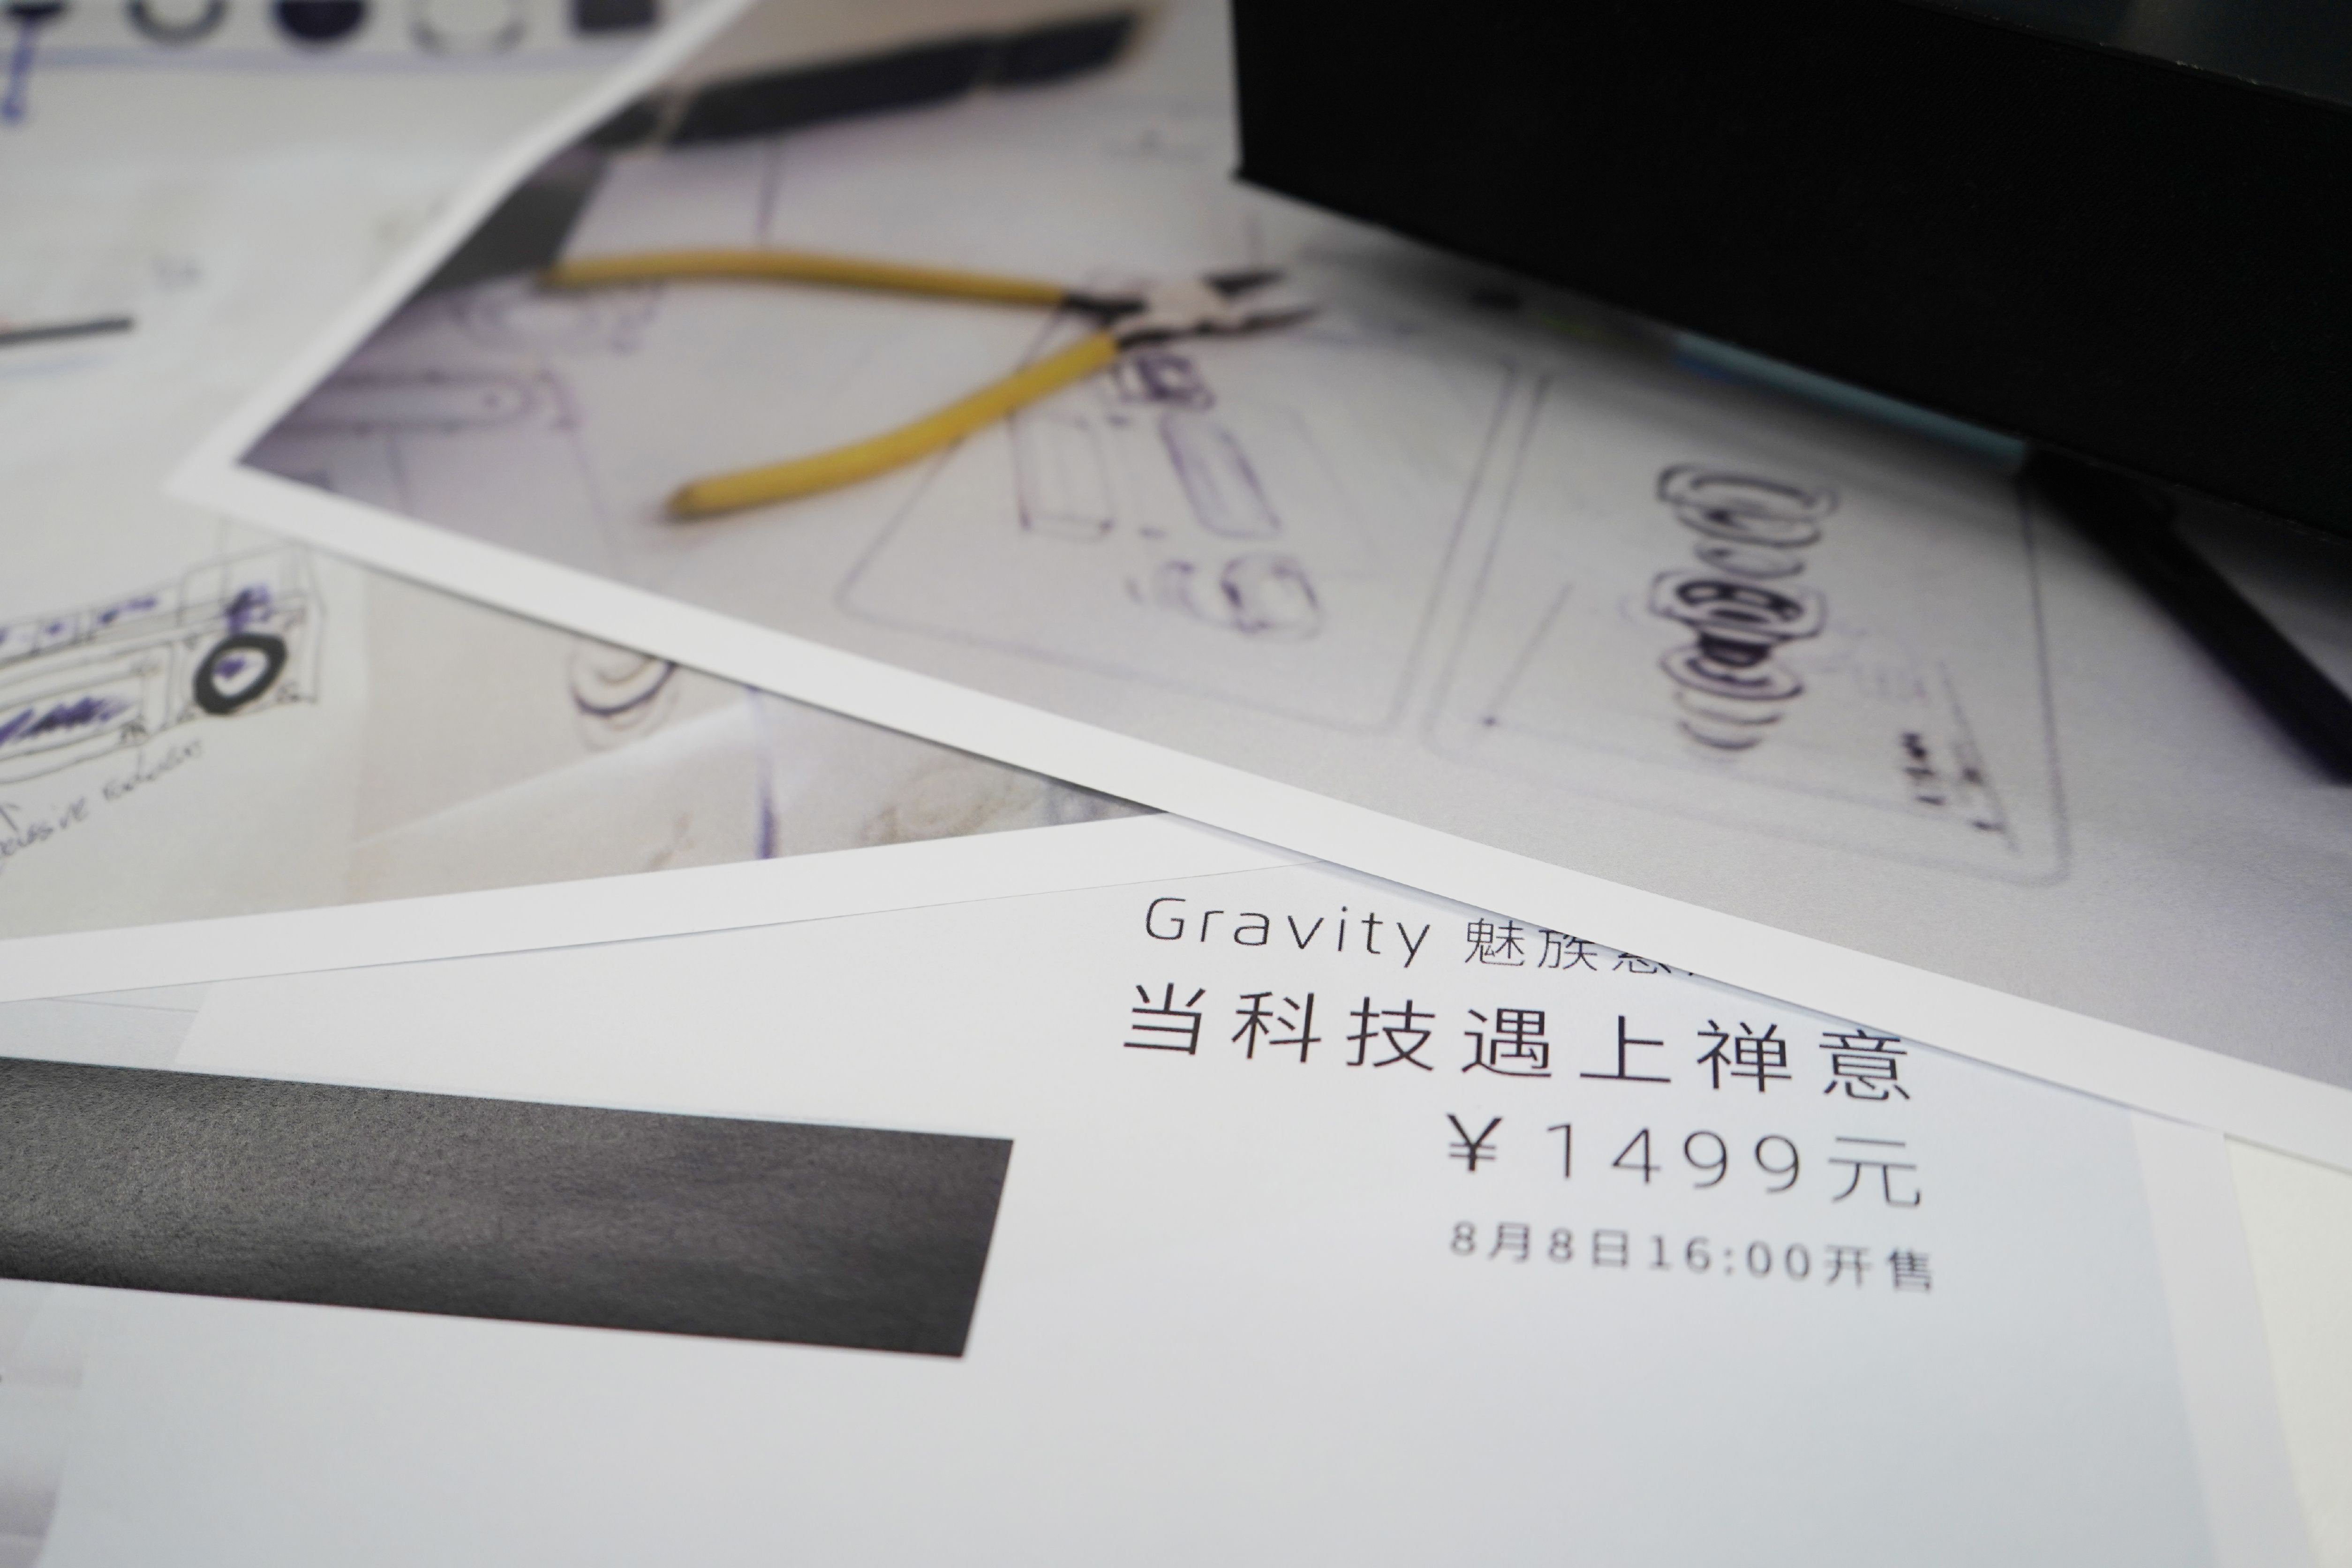 Meizu  Gravityは1499元(約24,000円)で販売か